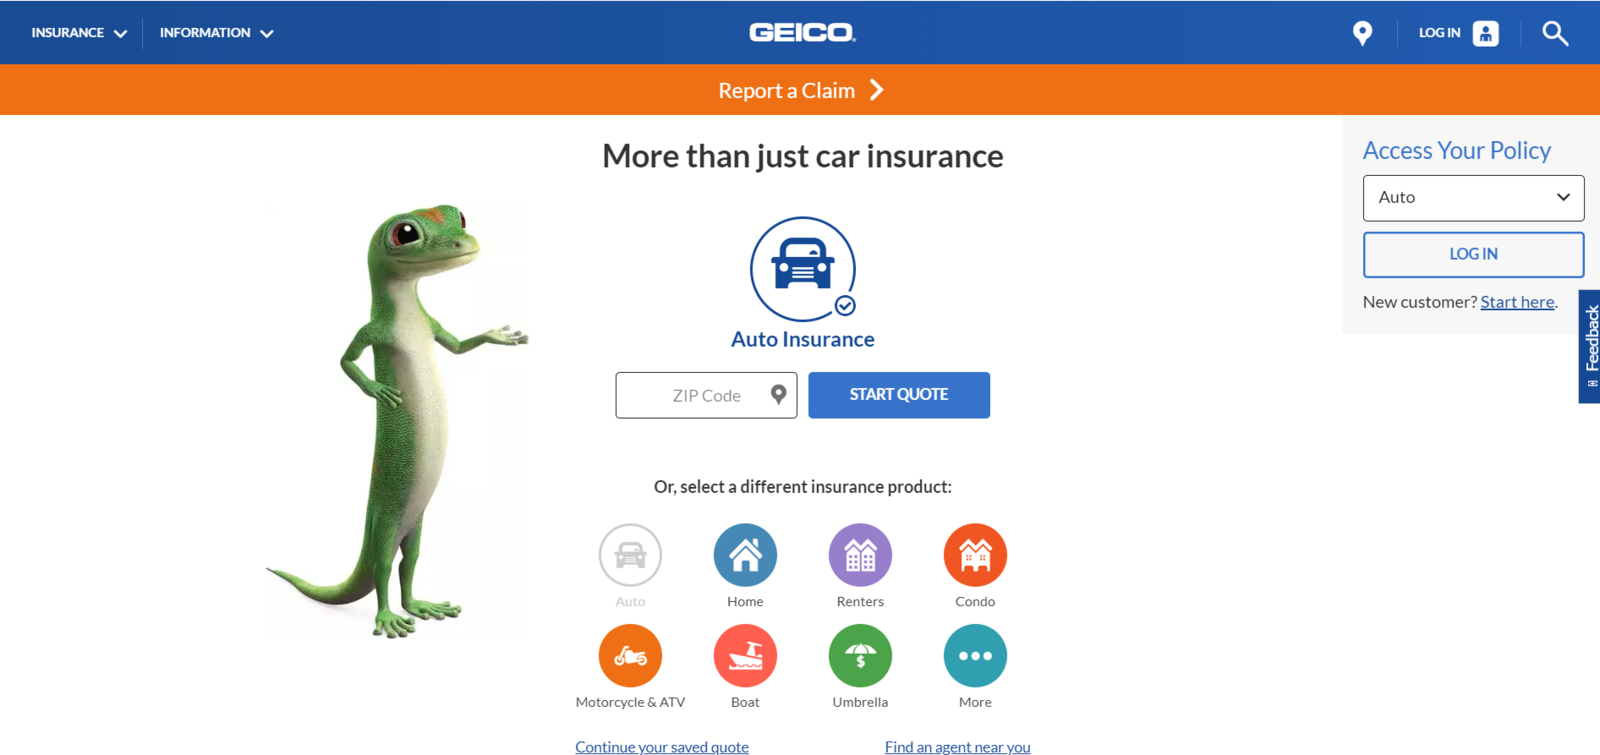 Best Ford Mustang Mach-E Car Insurance: Geico